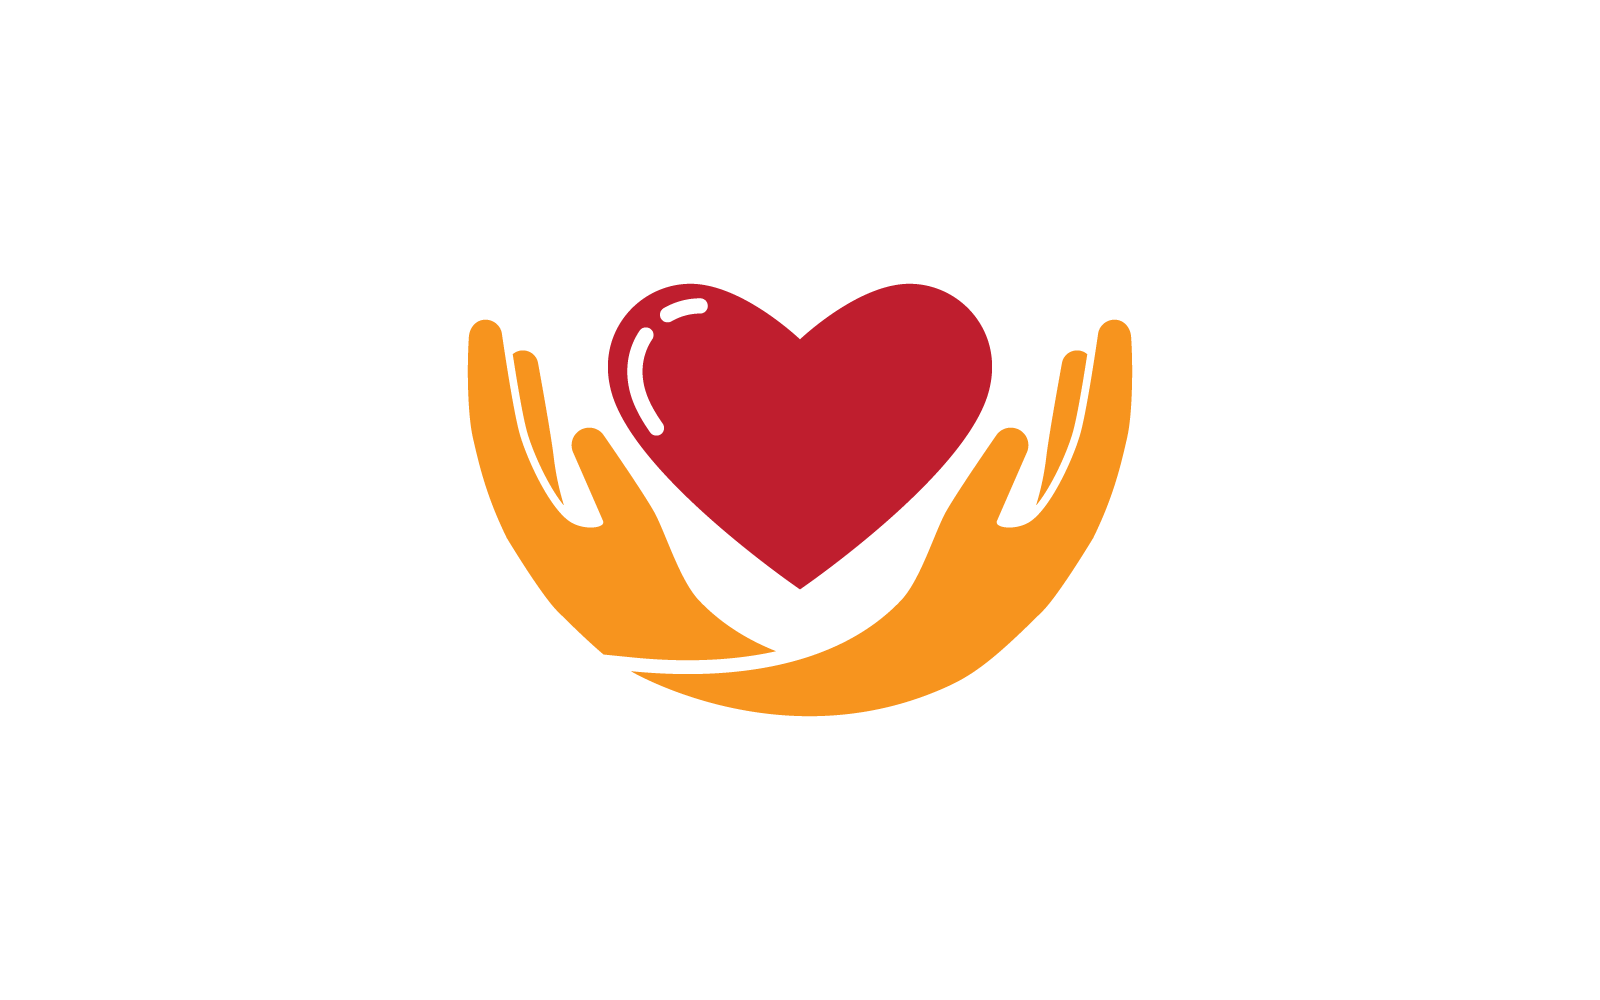 Love and hand logo vector flat design